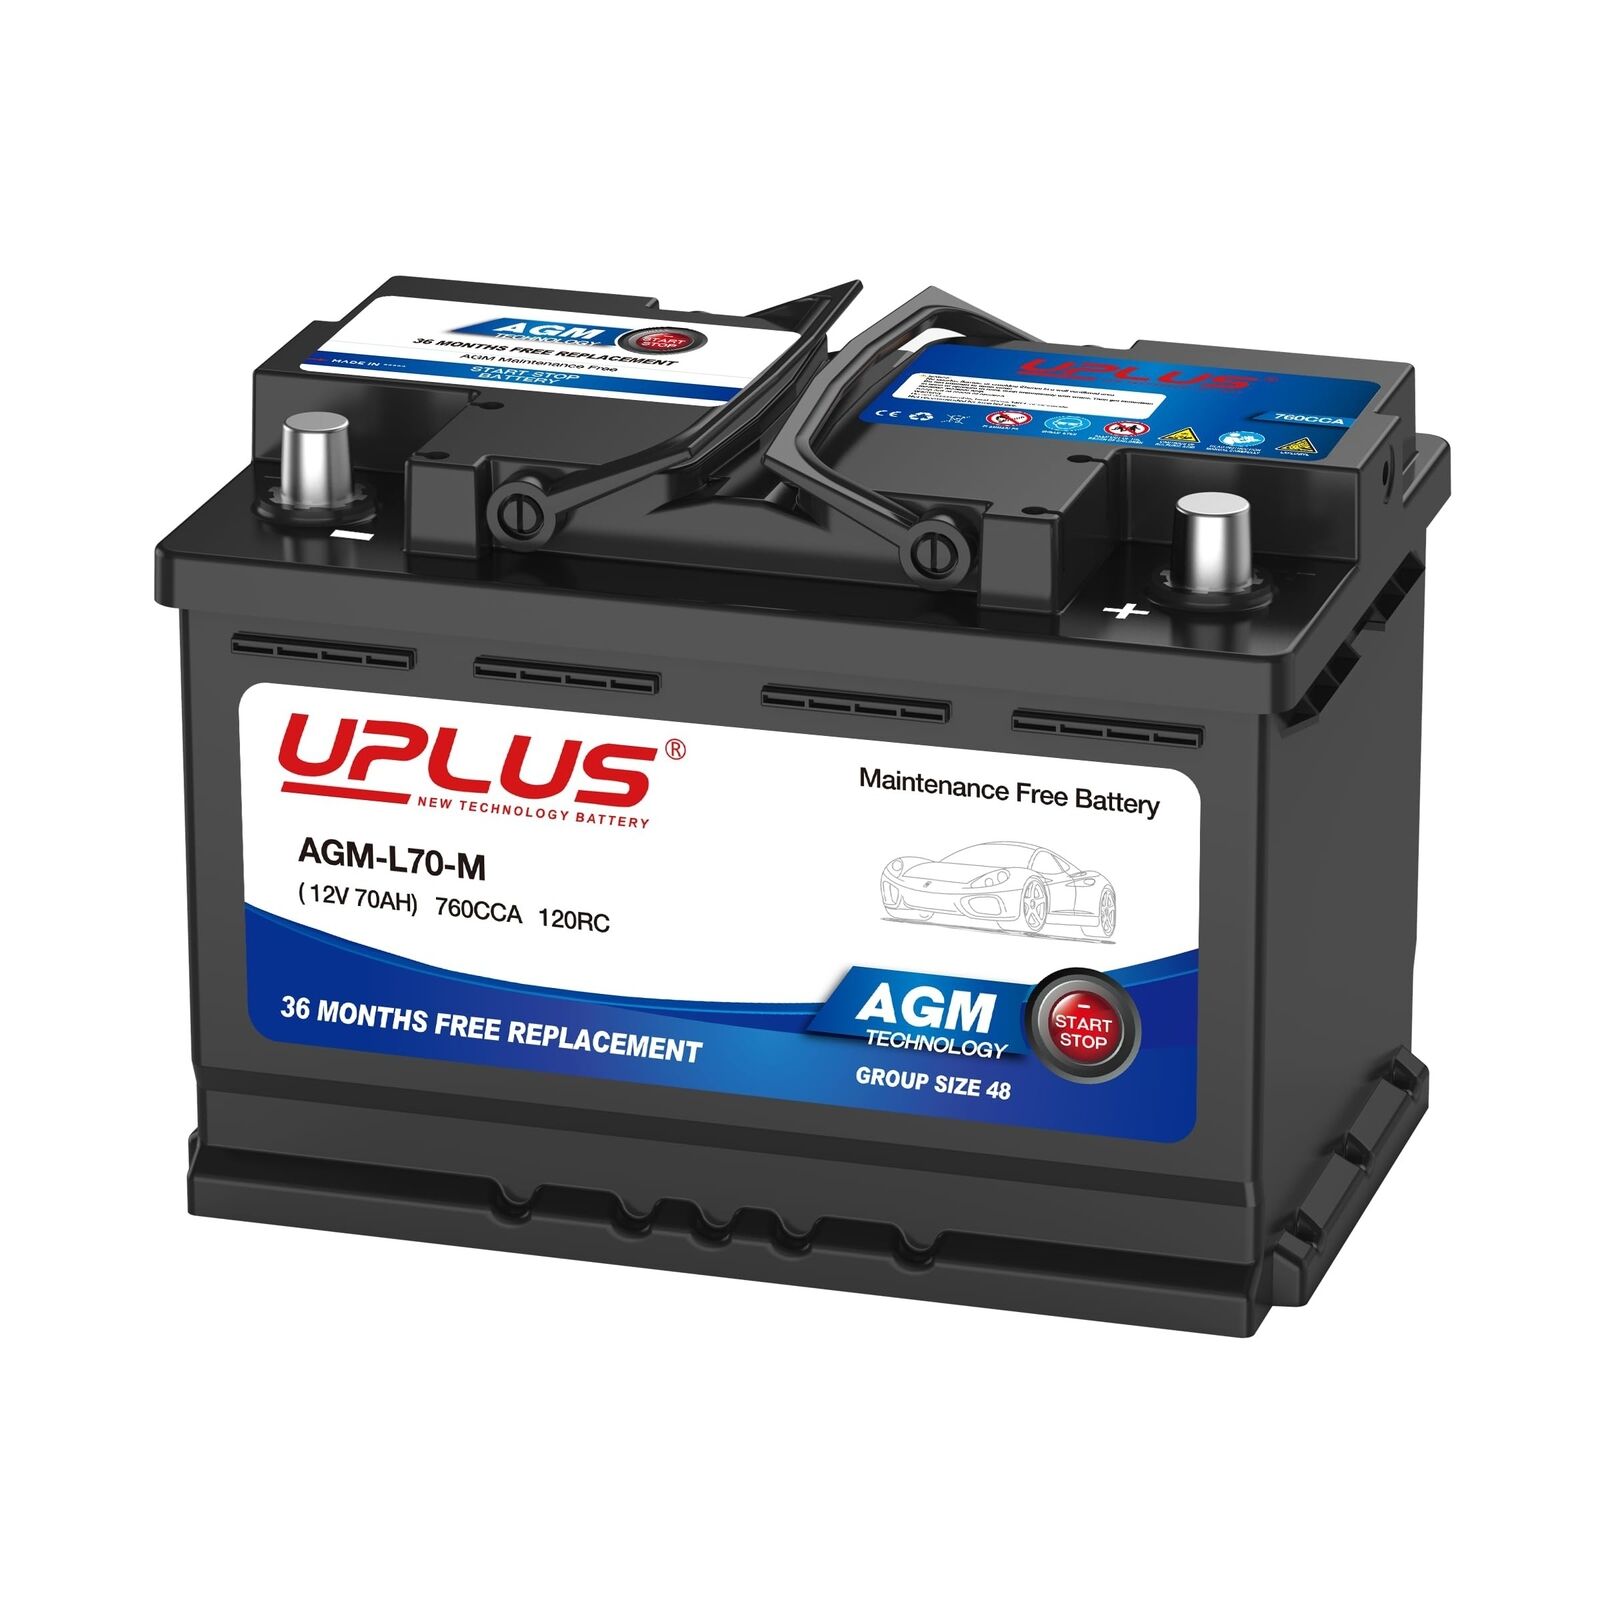 UPLUS BCI Group 48 AGM Start-Stop Car Battery, AGM-L70-M Maintenance Free 12V...